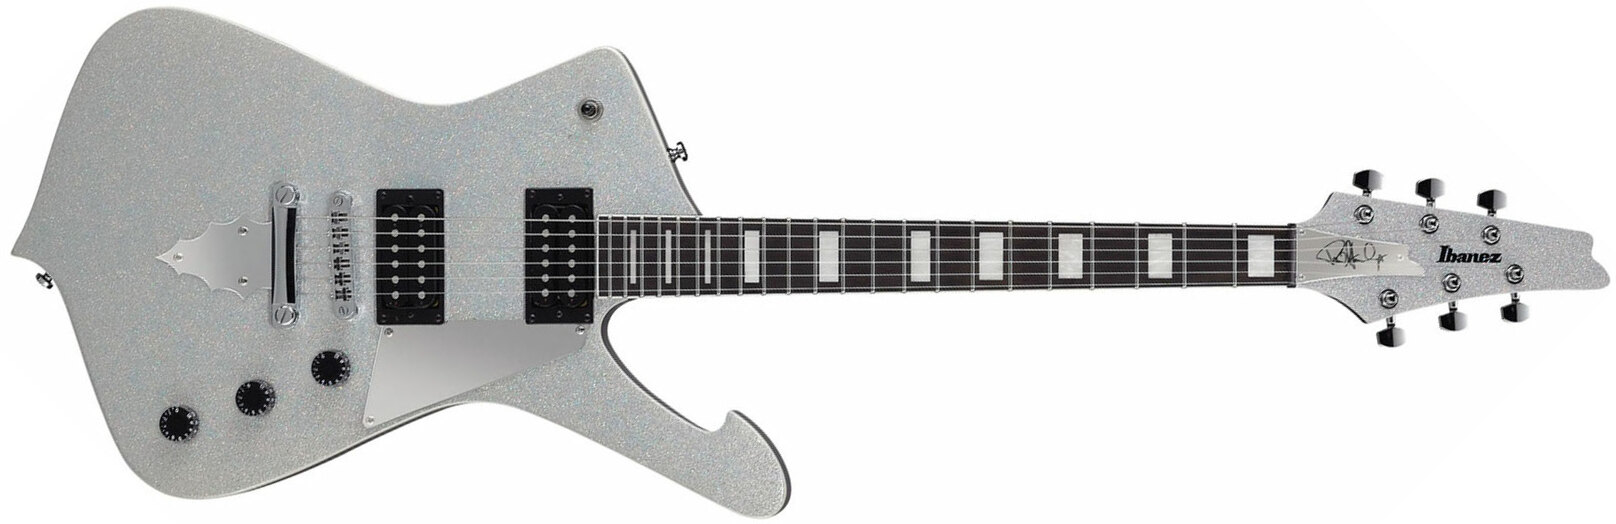 Ibanez Paul Stanley Ps60 Ssl Signature Hh Ht Pur - Silver Sparkle - Guitarra electrica metalica - Main picture